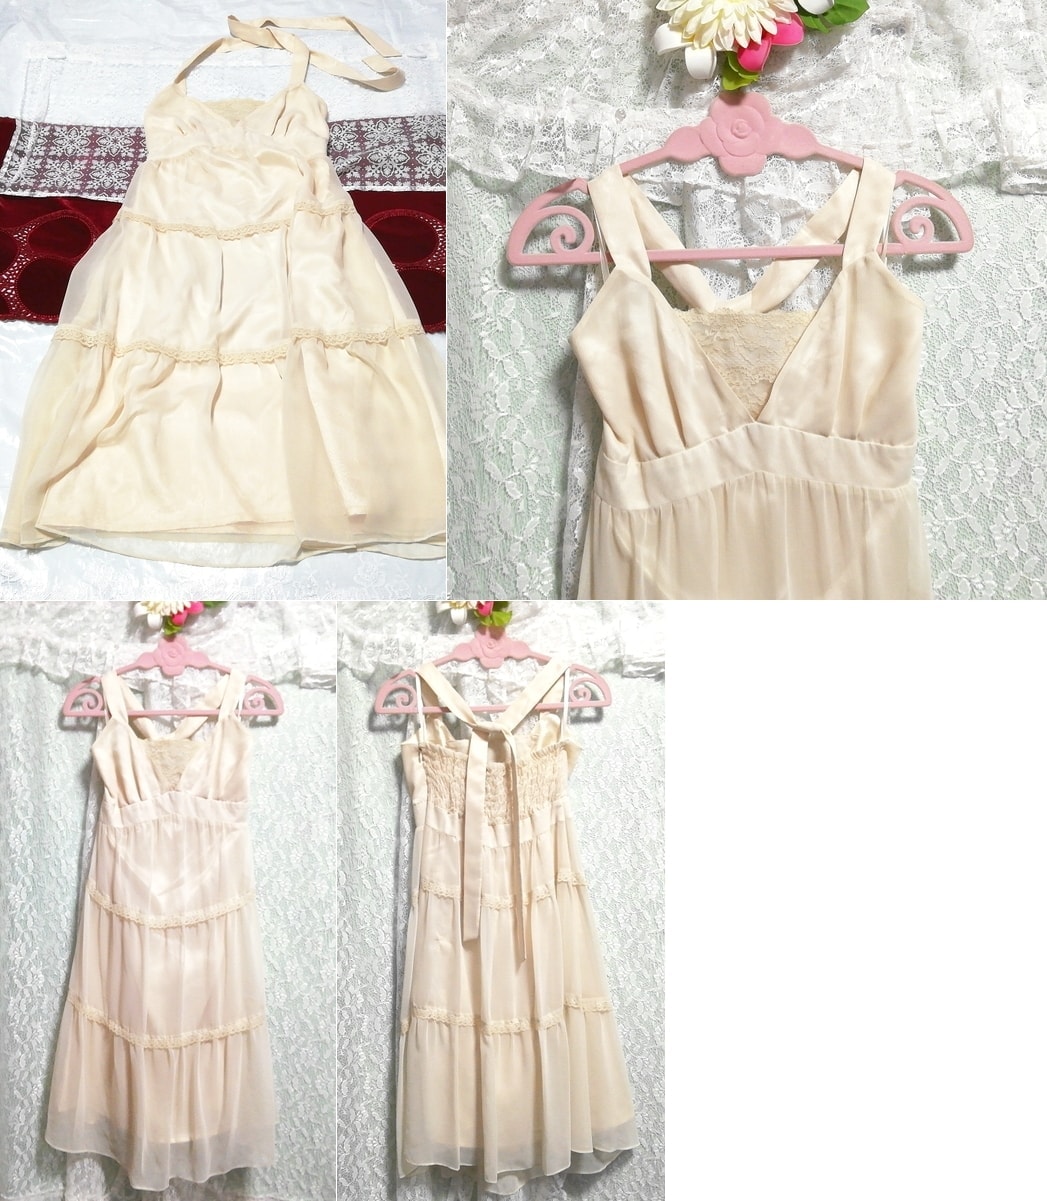 Flaxen chiffon negligee nightgown camisole dress, knee length skirt, m size